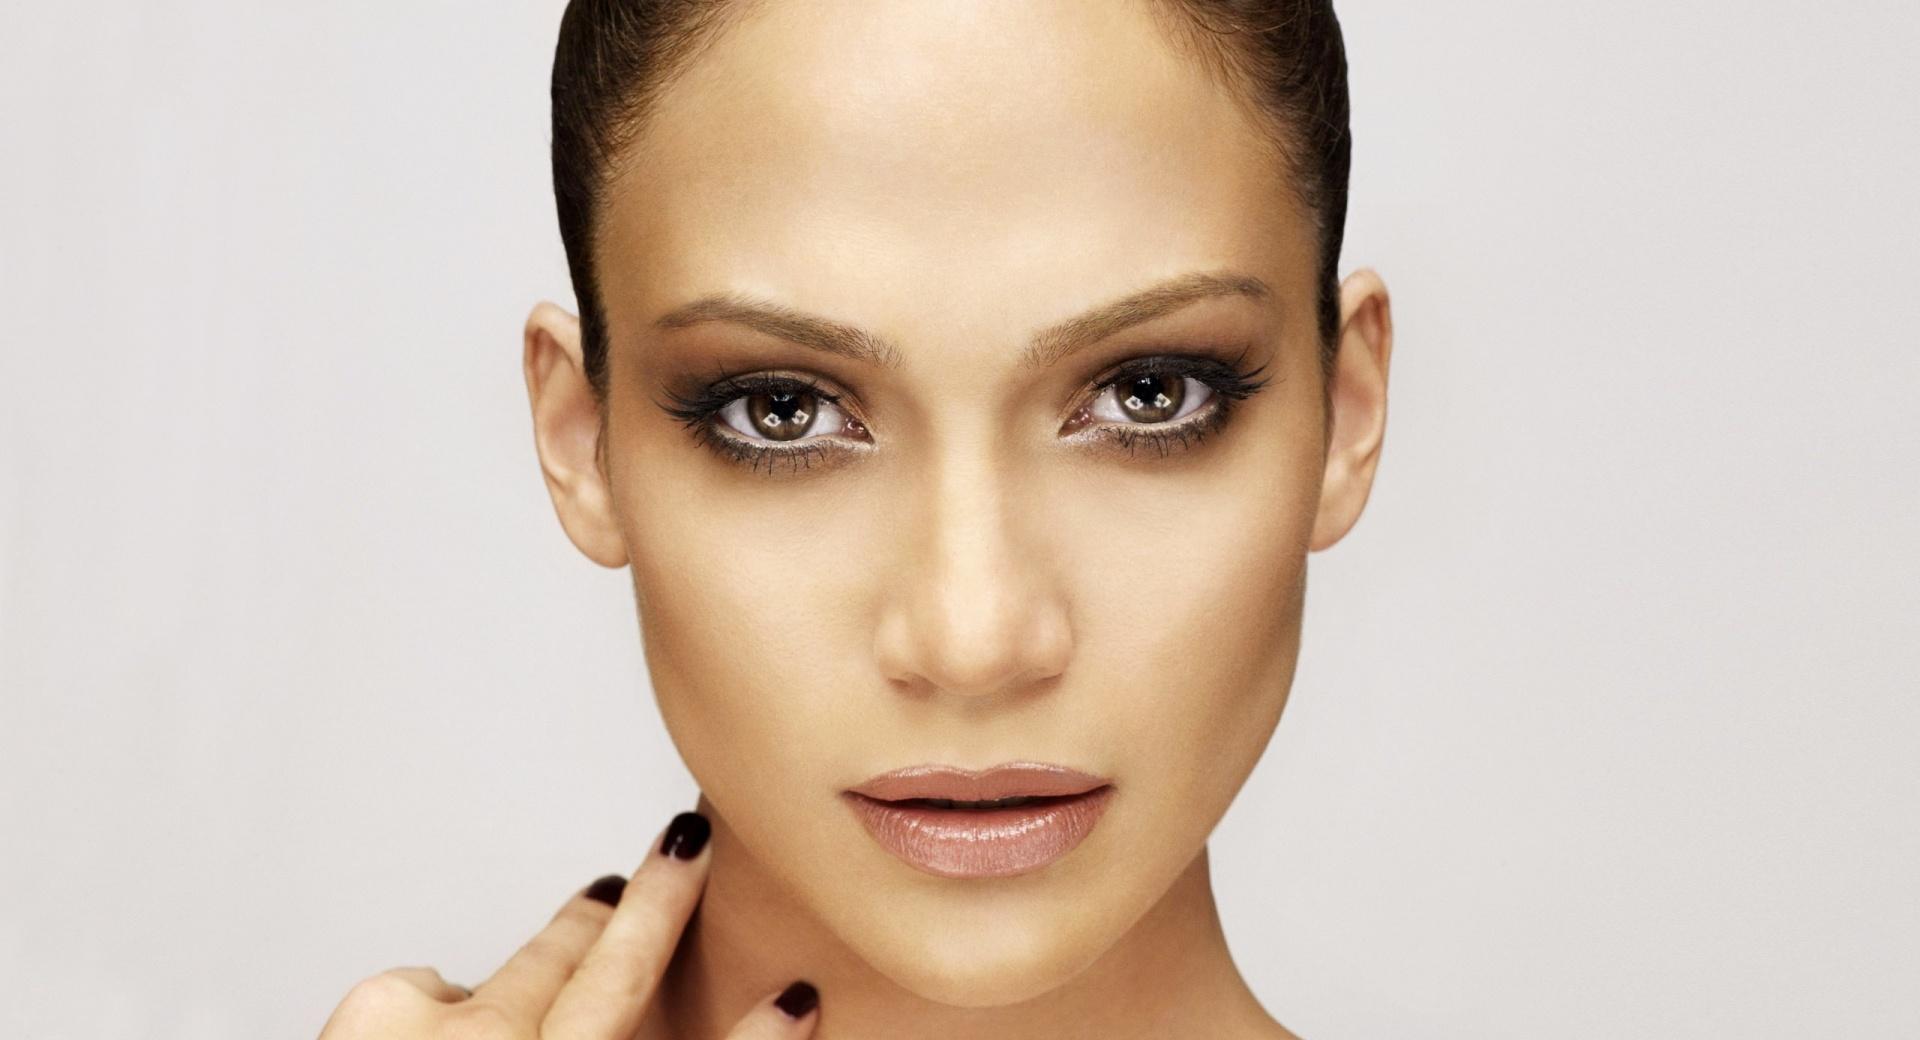 Jennifer Lopez Portrait at 1280 x 960 size wallpapers HD quality